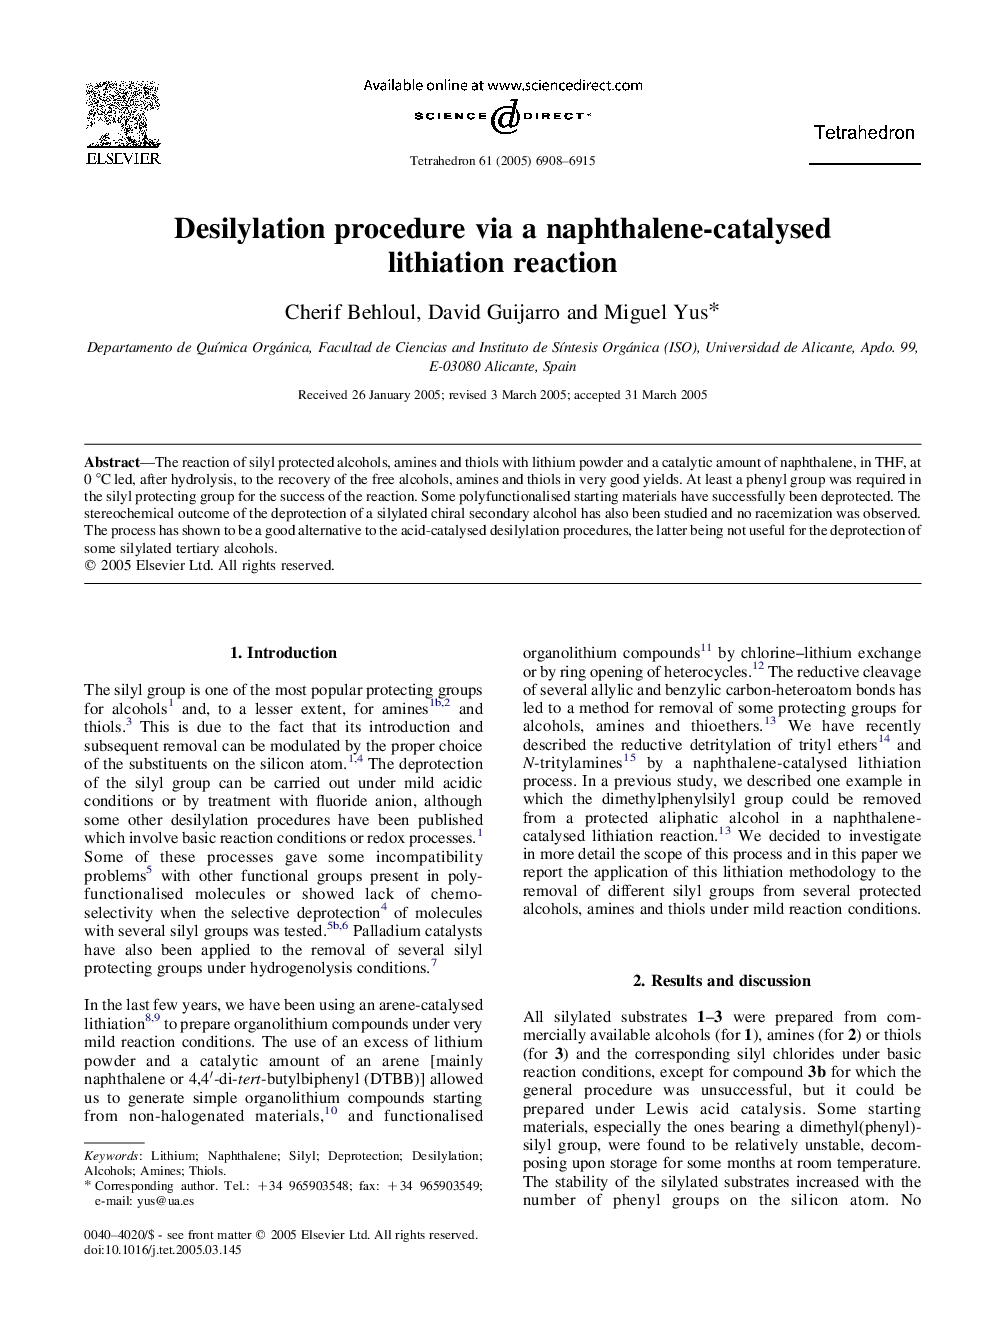 Desilylation procedure via a naphthalene-catalysed lithiation reaction